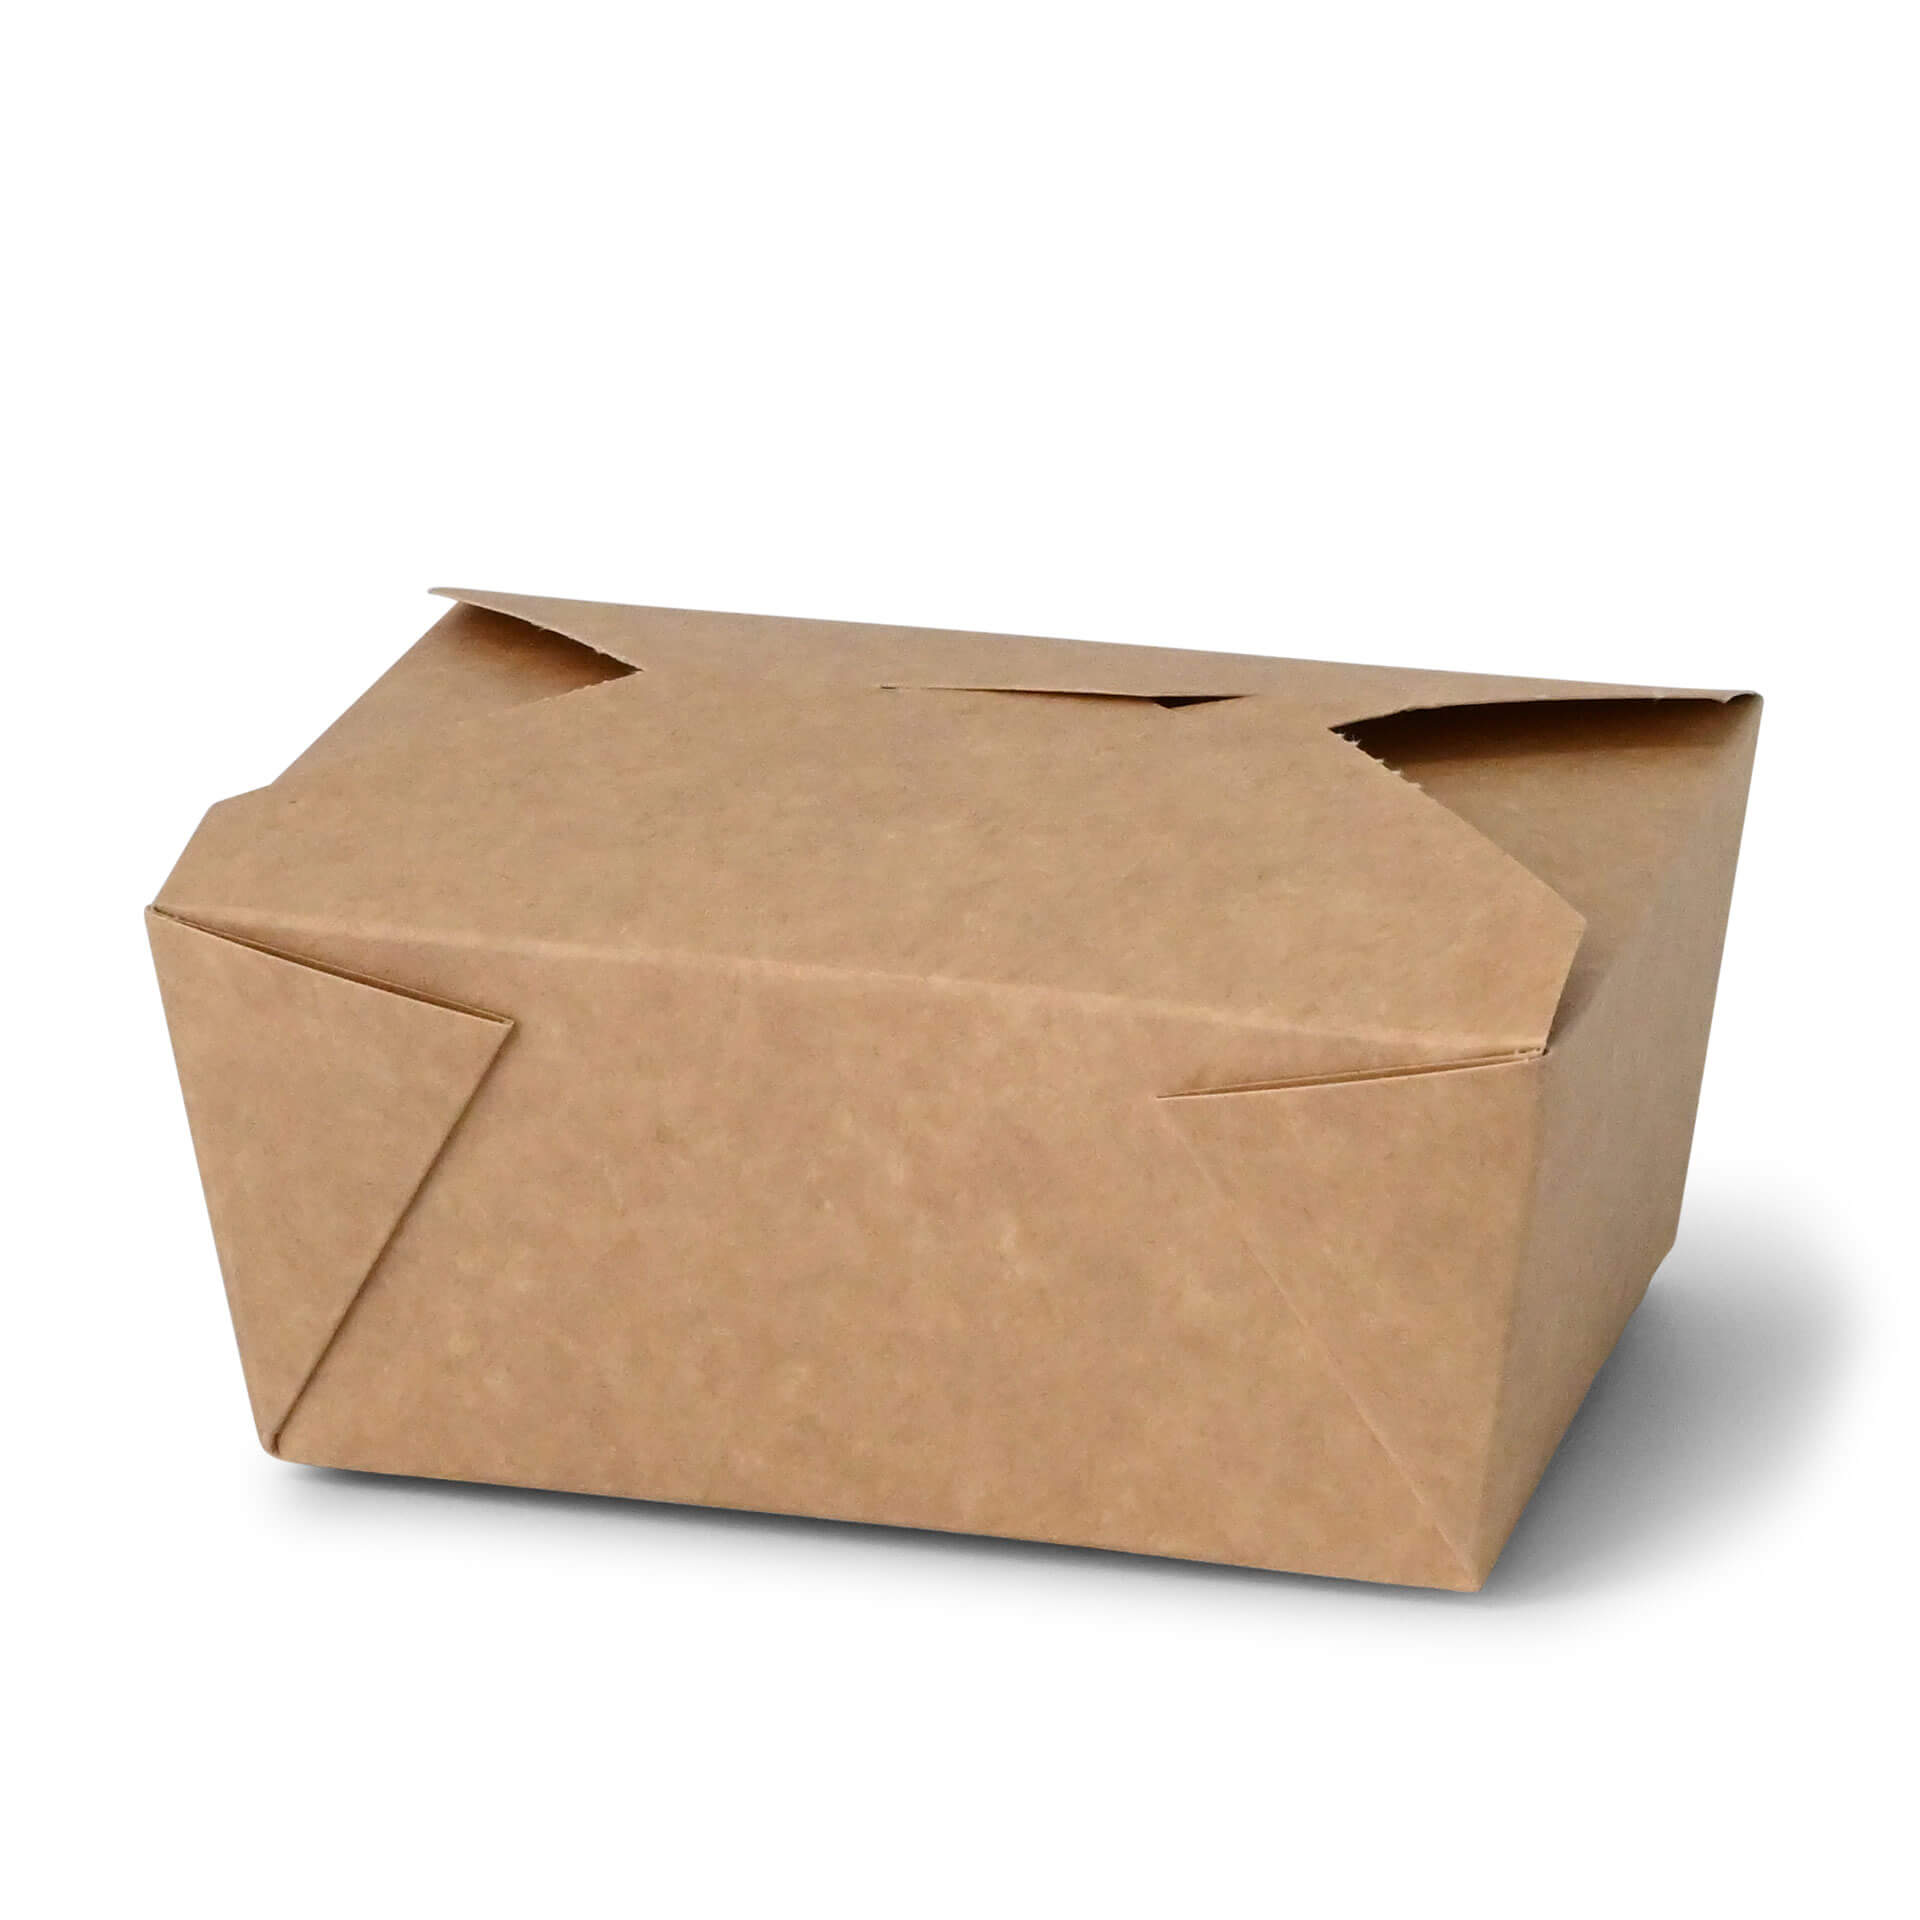 Take-away-Karton-Boxen 1200 ml, braun